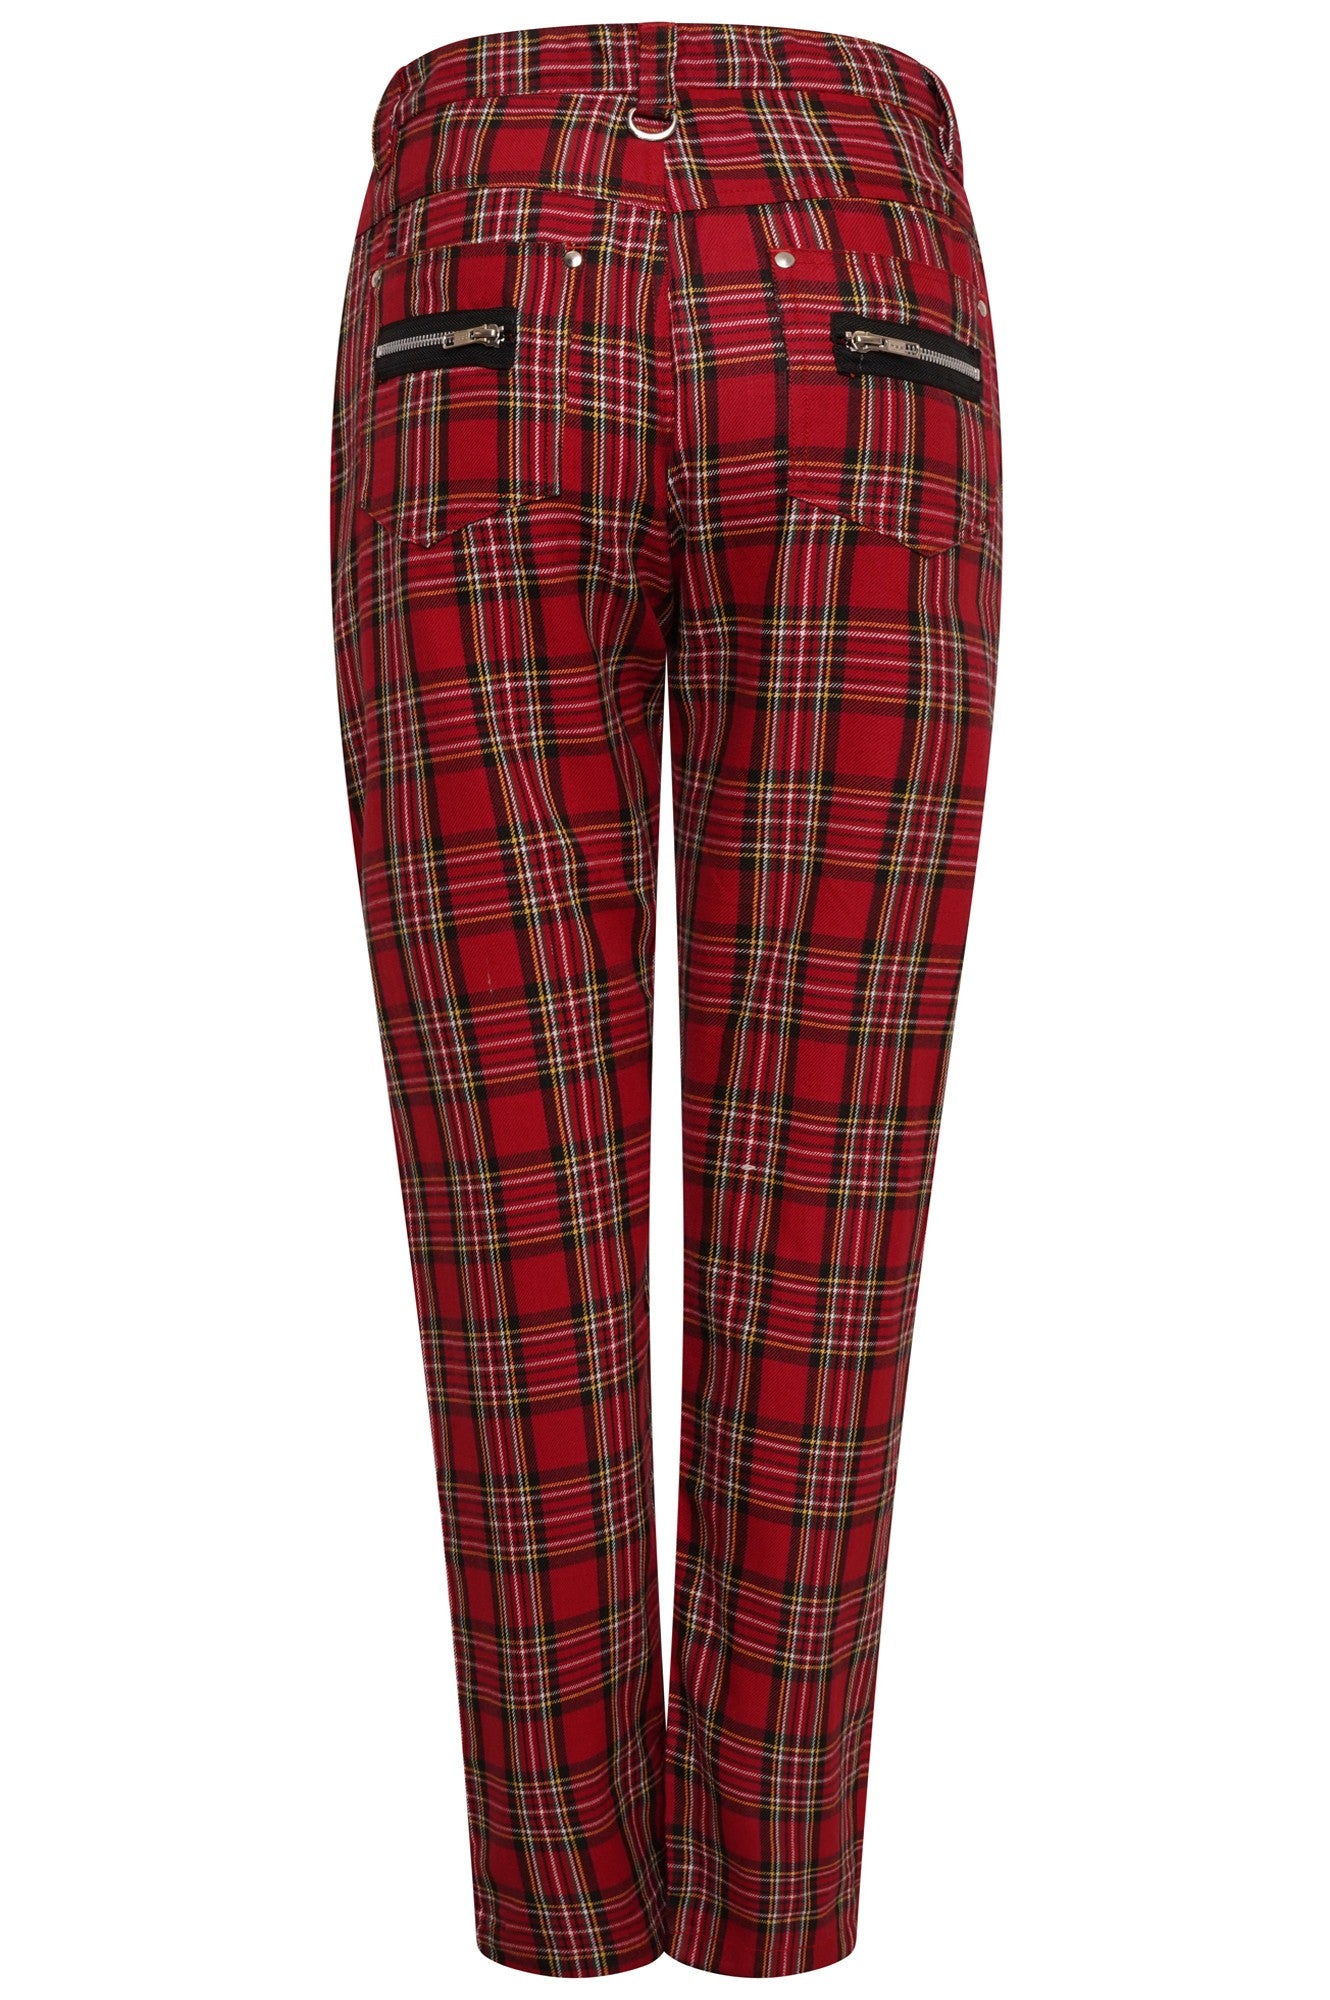 Ro Rox Ella Capri Pants - 1950s Vintage Style Women's Trousers - High Waist  - Zipper & Slits on Back - Ladies Trousers